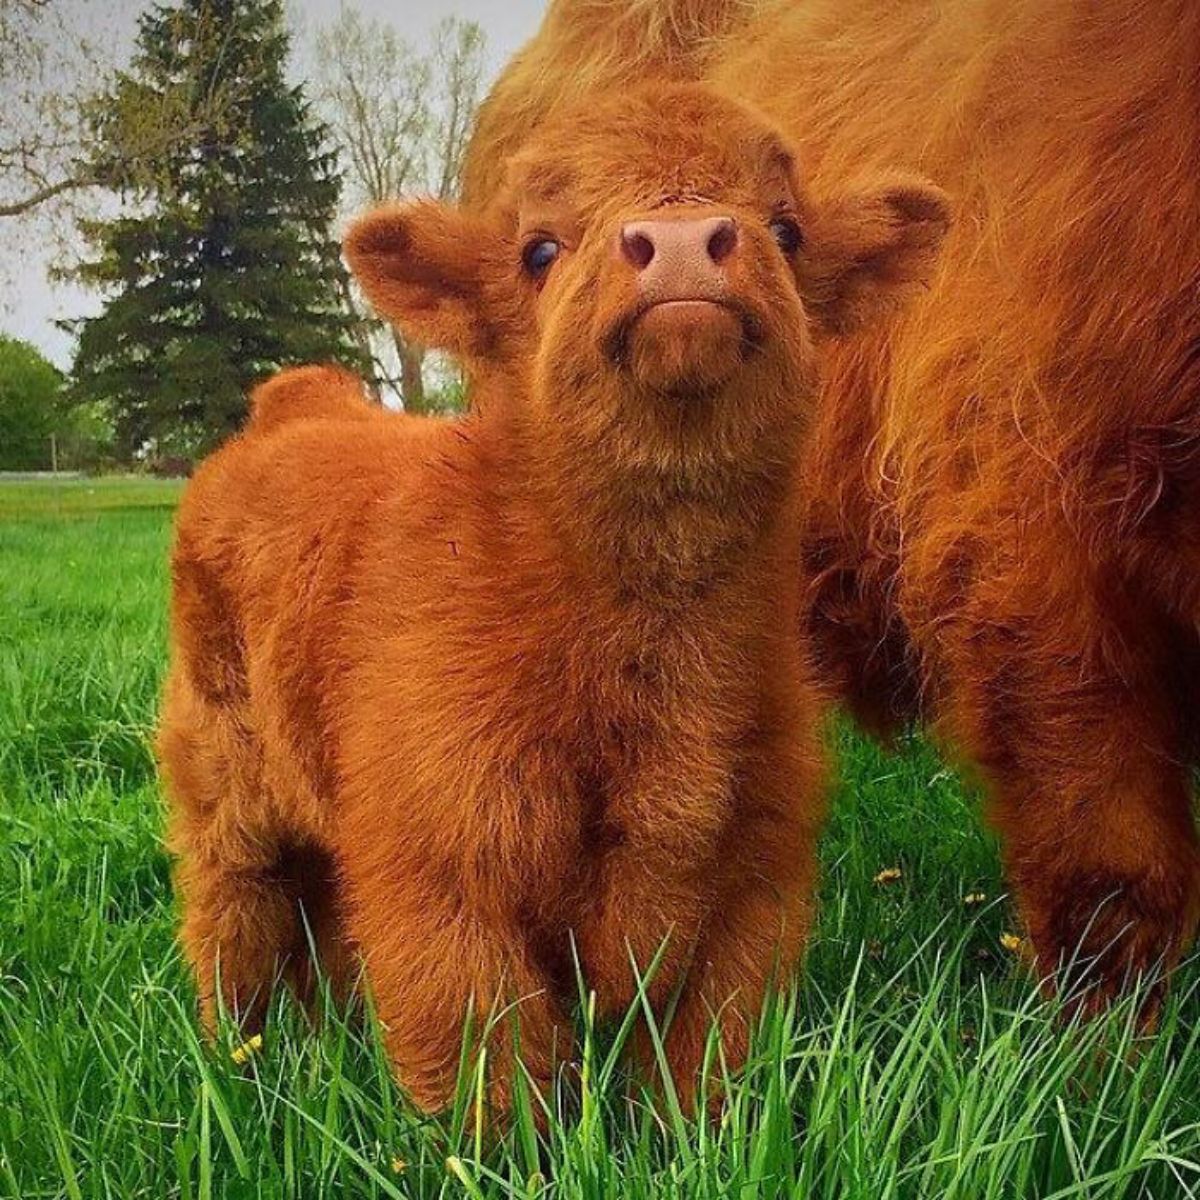 brown calf next to a brown cow